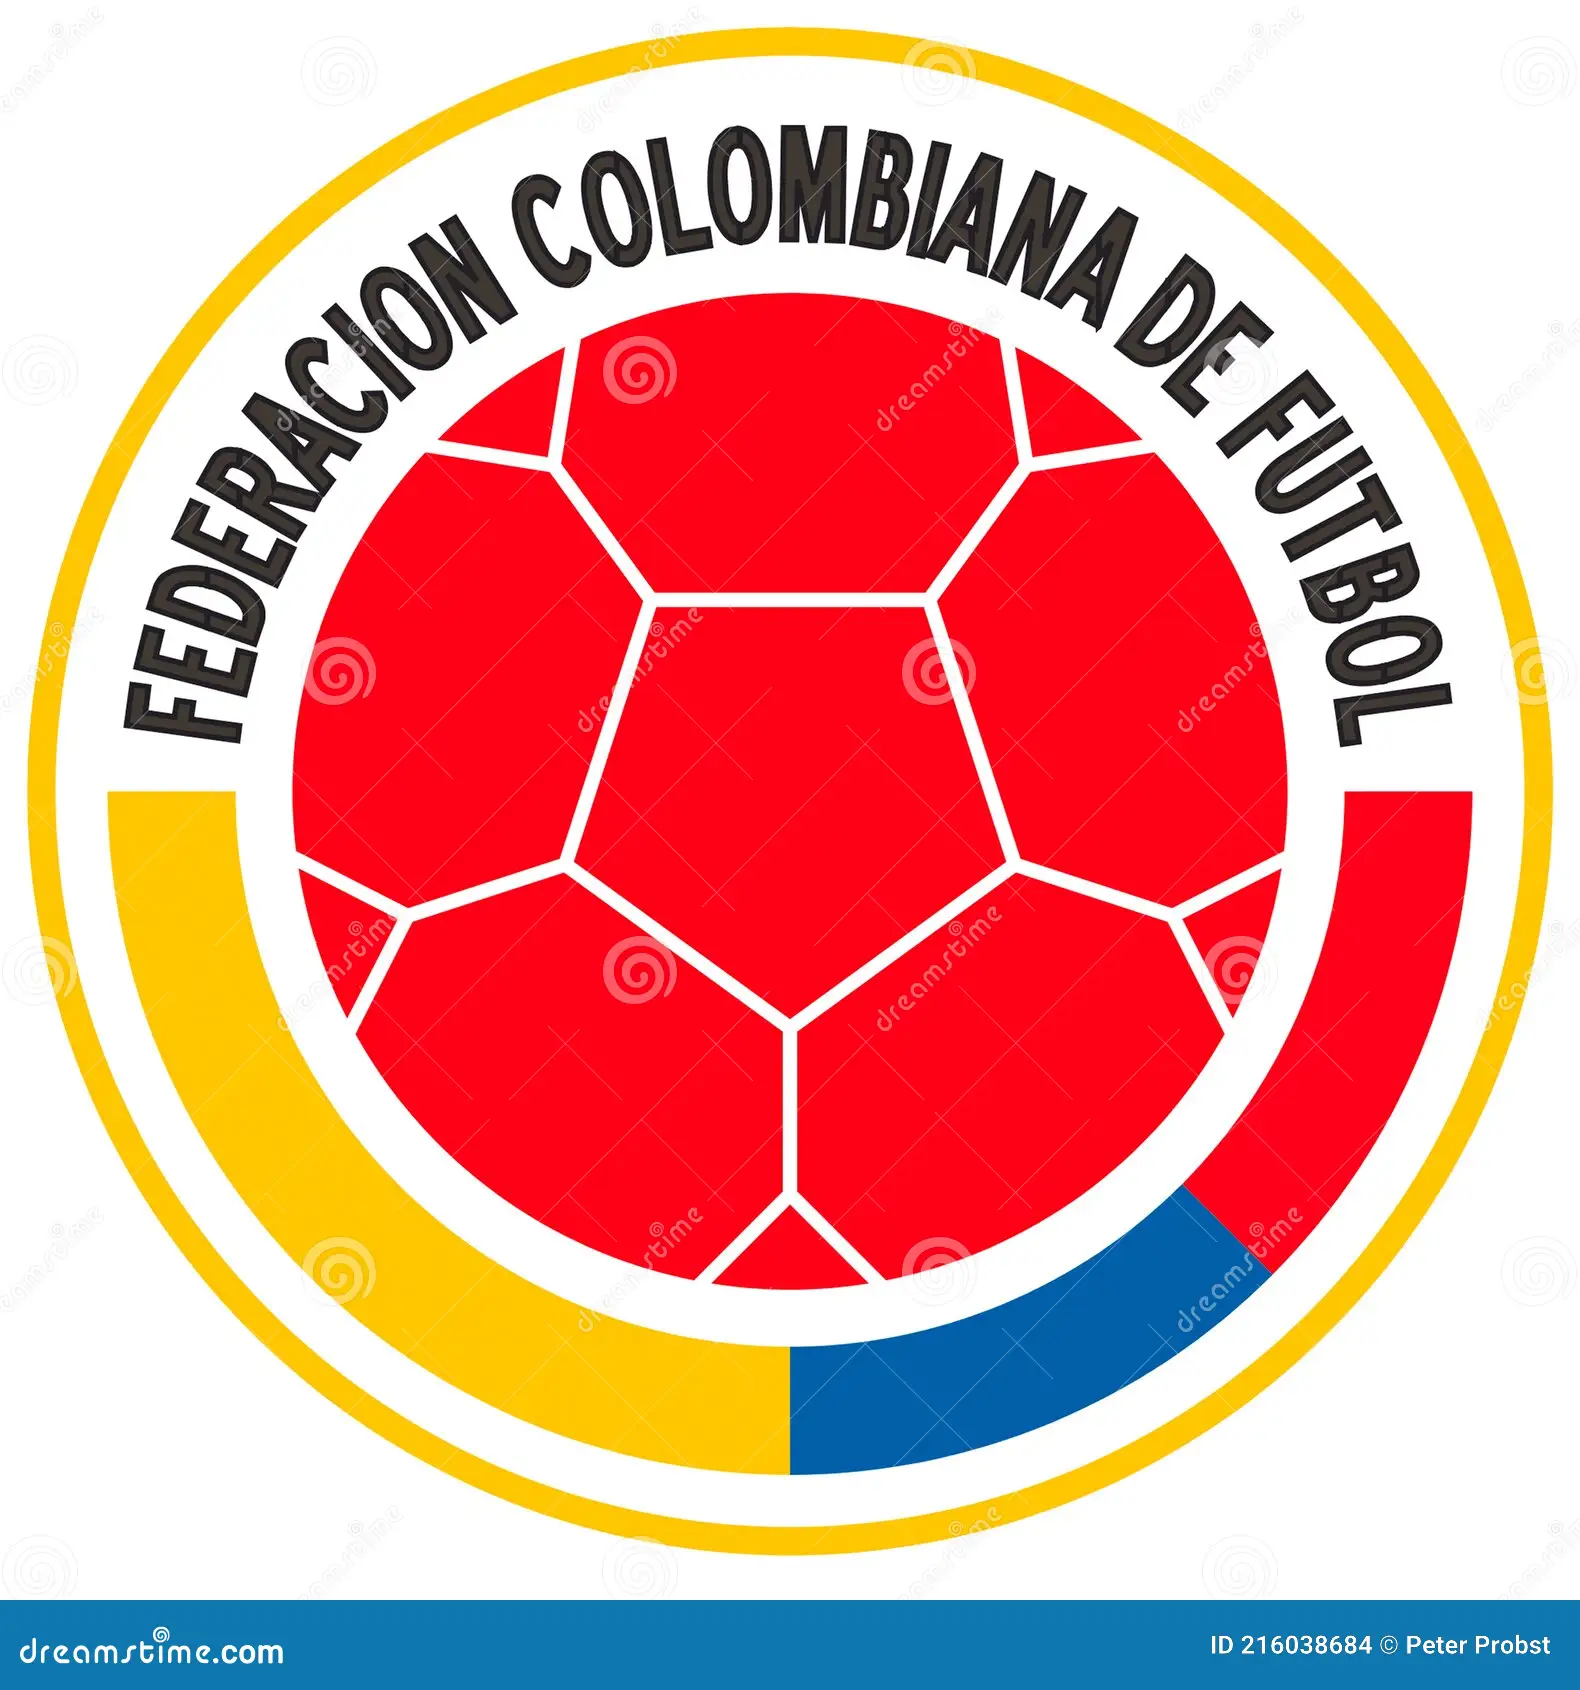 IColombias National Football Team.webp